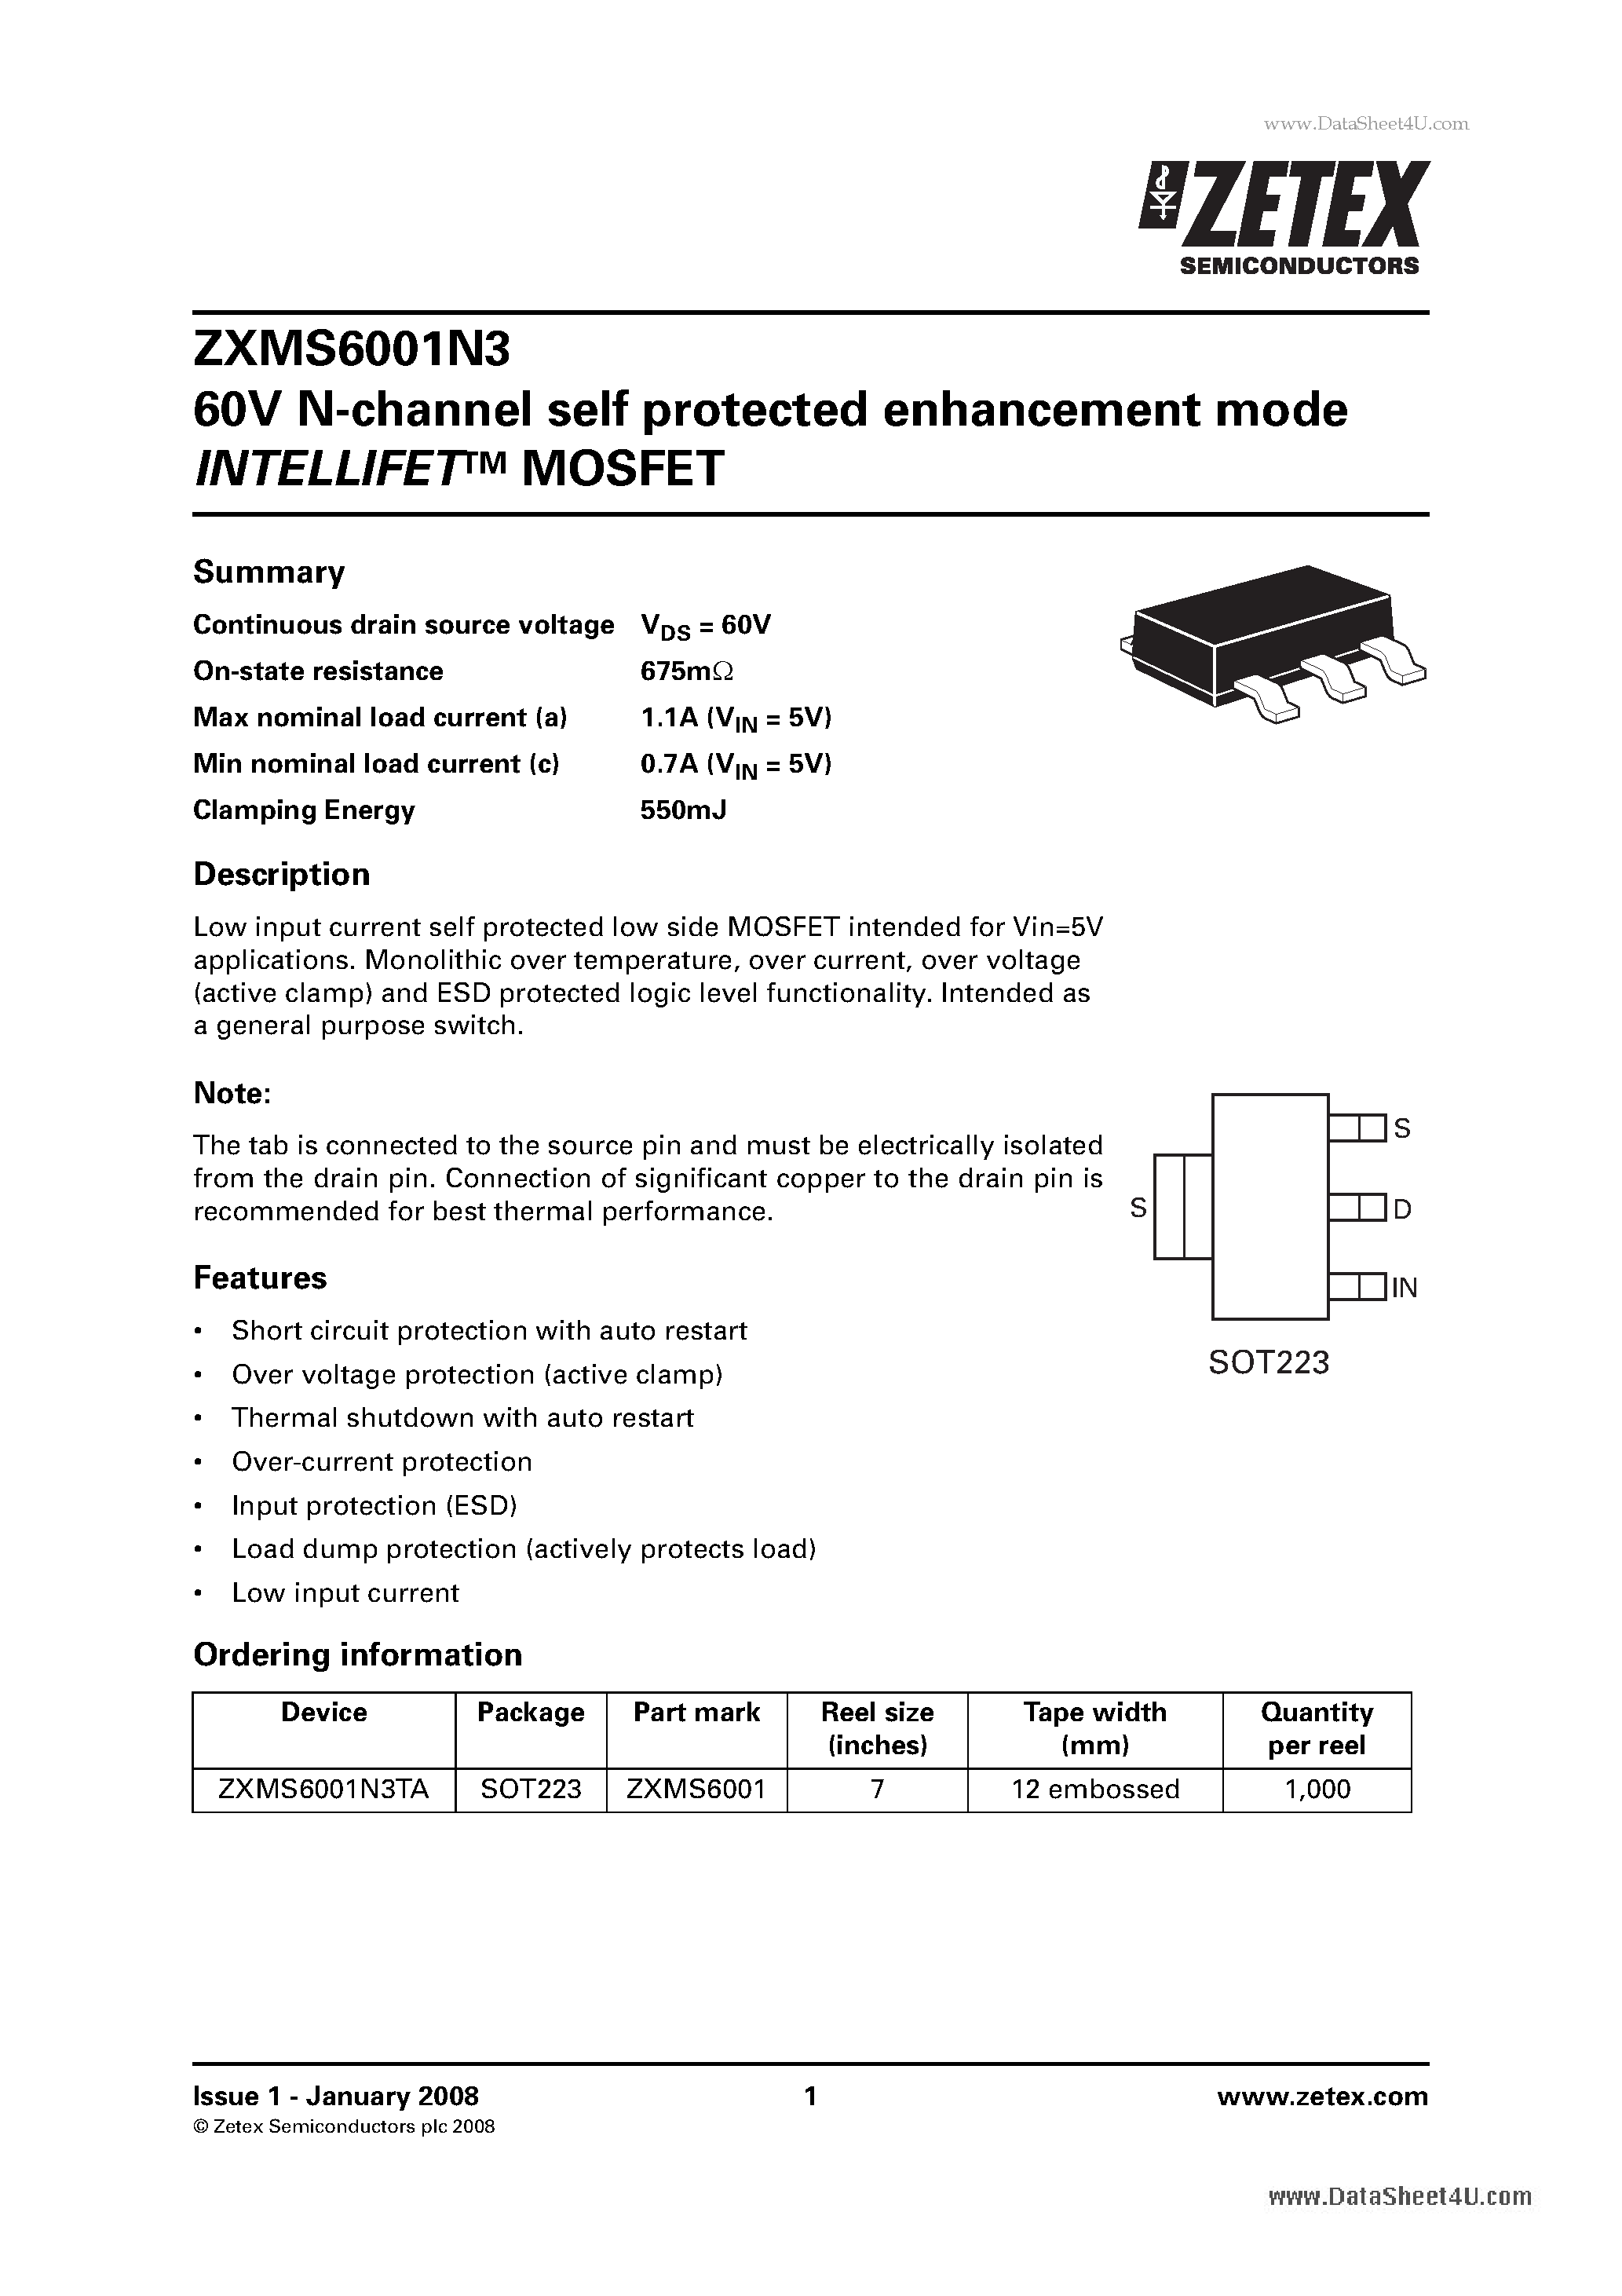 Даташит ZXMS6001N3 - 60V N-channel self protected enhancement mode INTELLIFETTM MOSFET страница 1